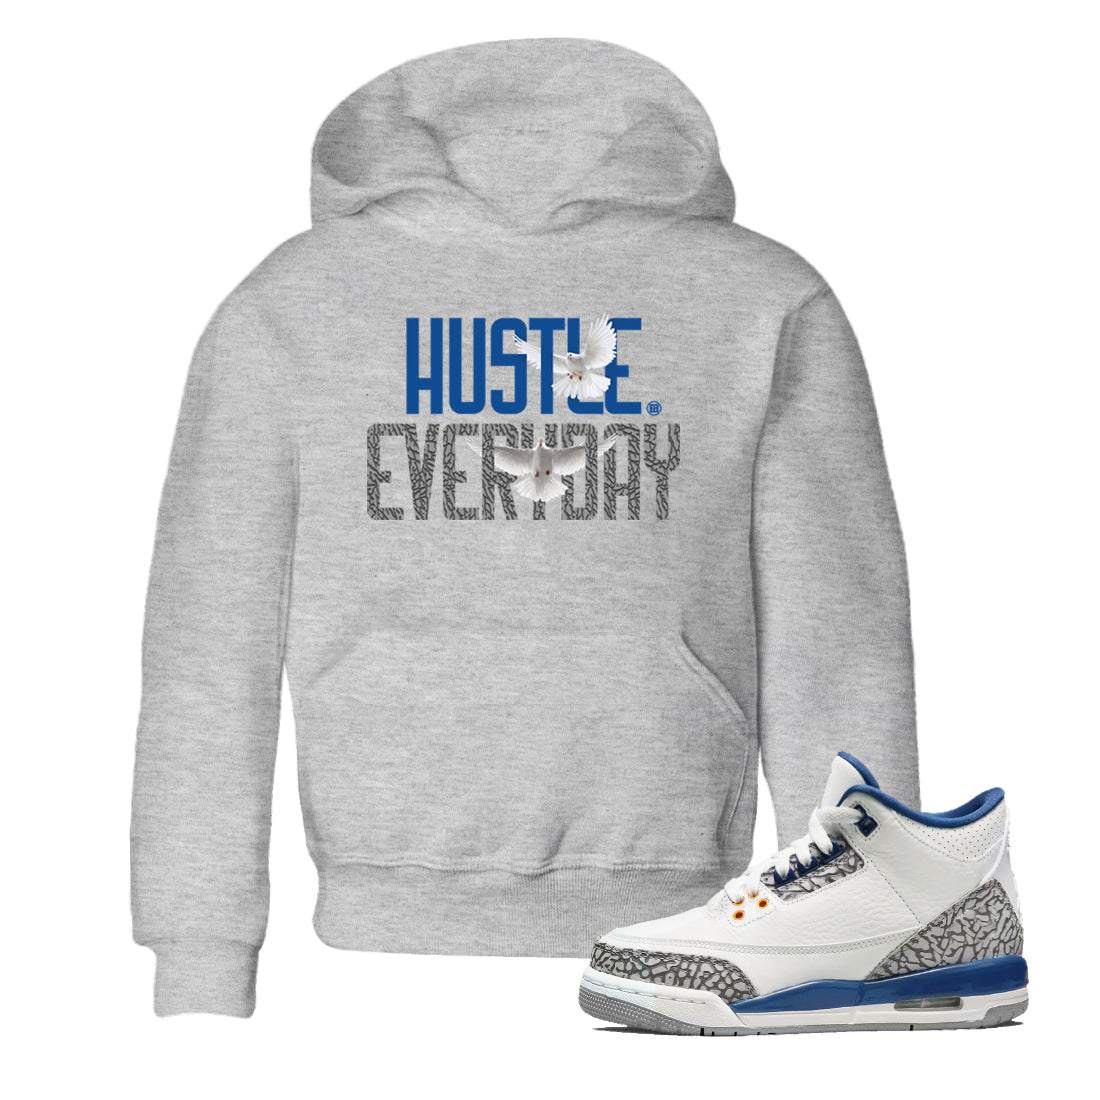 Air Jordan 3 Wizards Sneaker Match Tees Daily Hustle Shirts Air Jordan 3 Wizards Shirts Kids Shirts Heather Grey 1